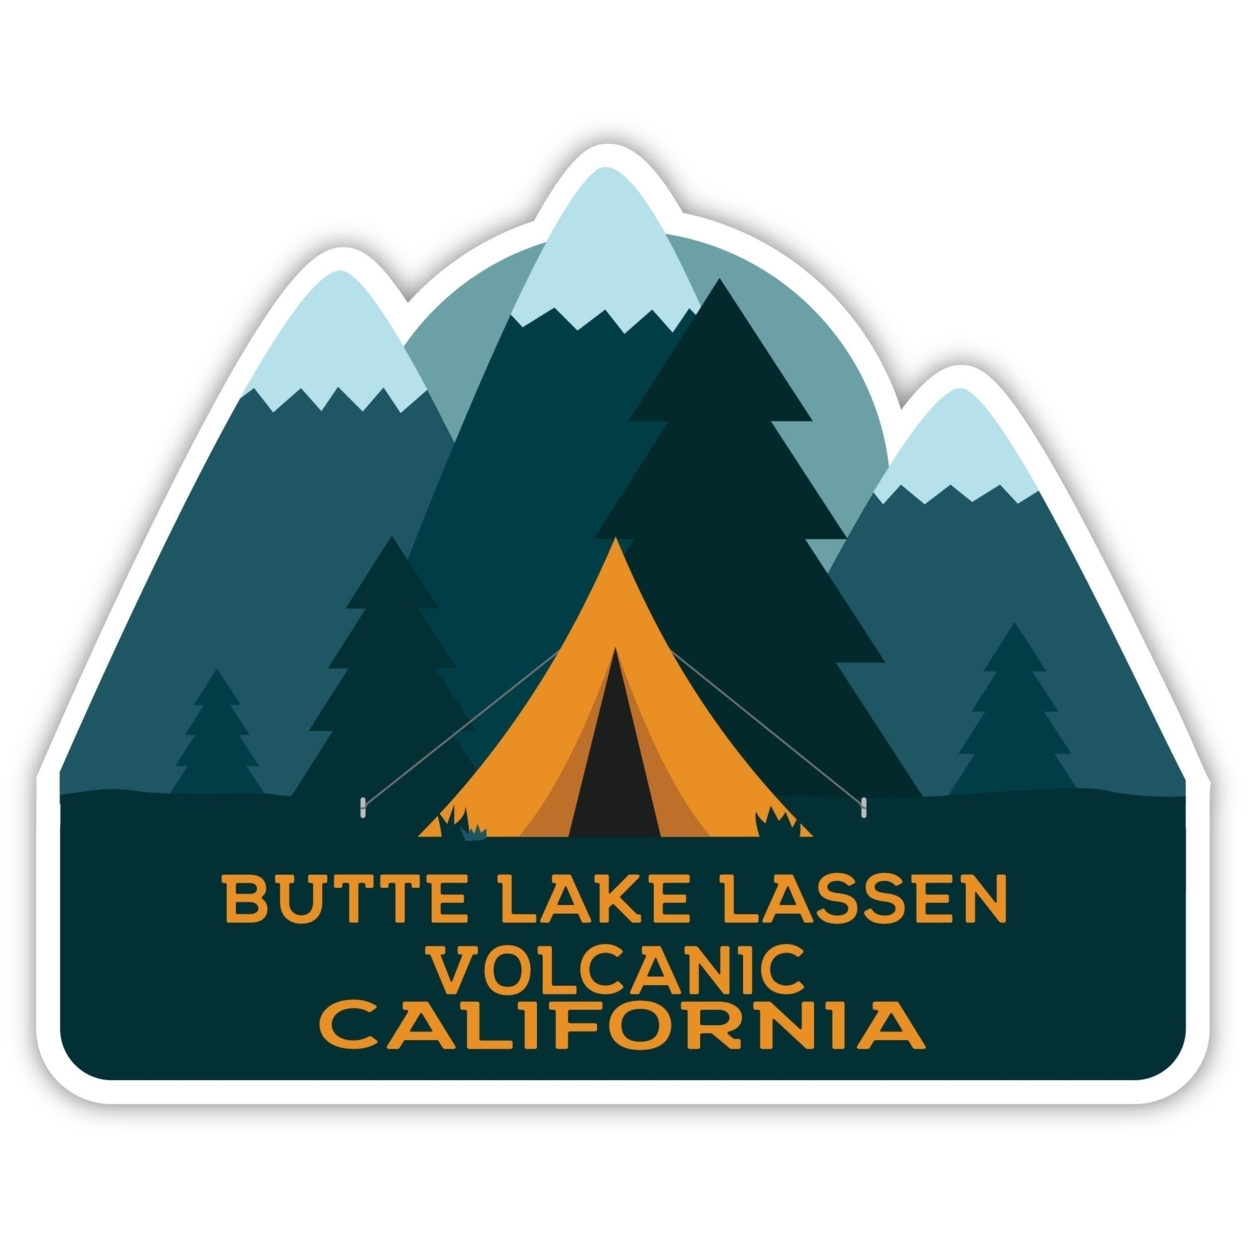 Butte Lake Lassen Volcanic California Souvenir Decorative Stickers (Choose Theme And Size) - 4-Pack, 8-Inch, Tent